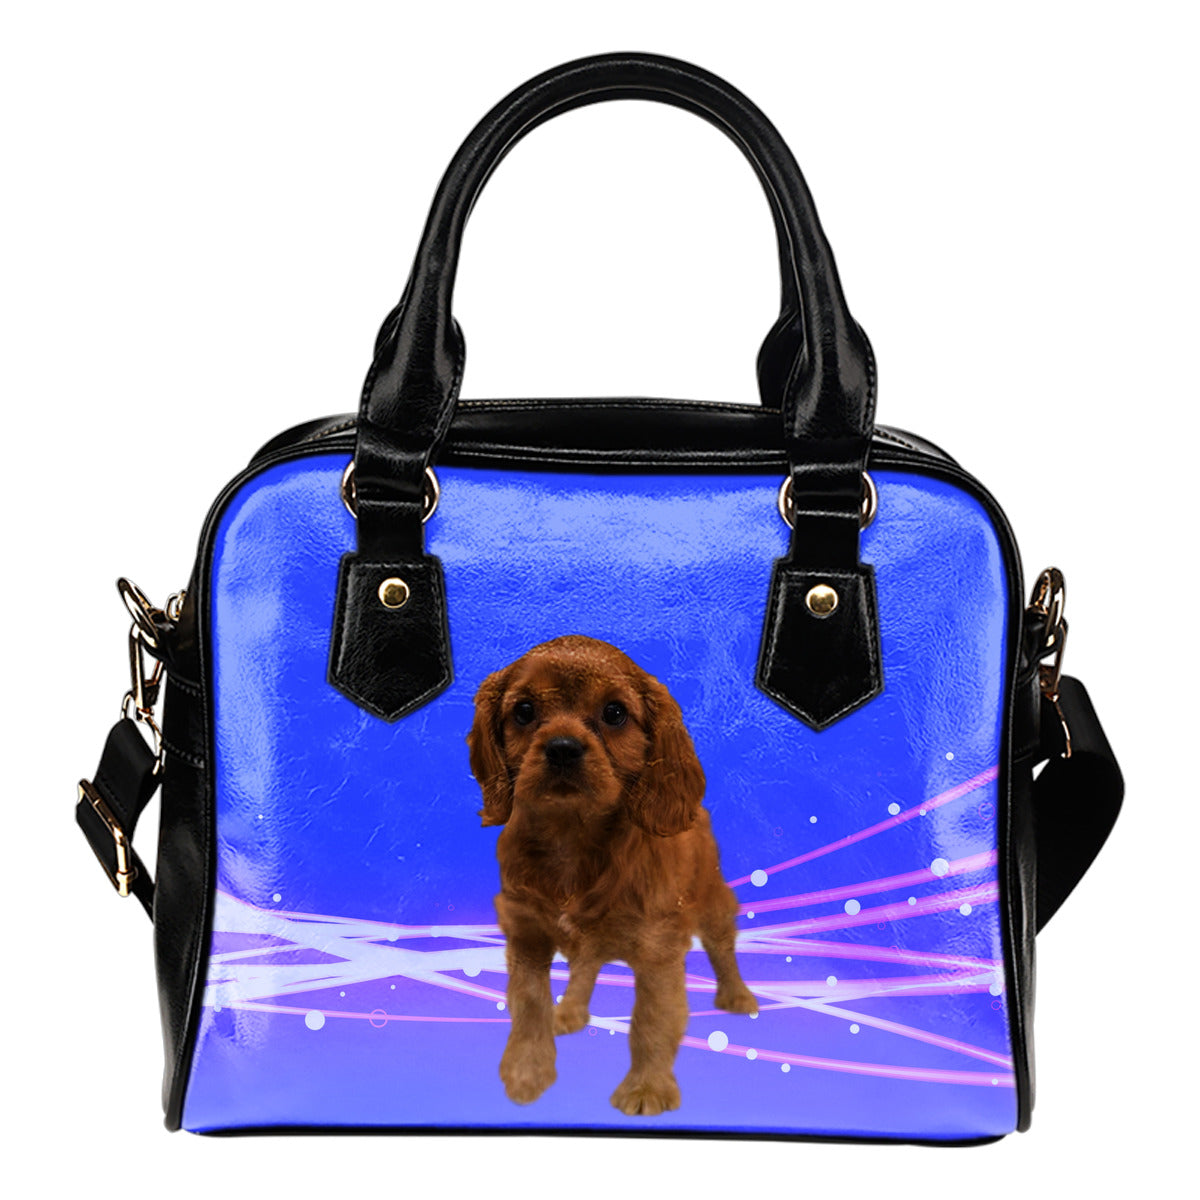 Cavalier King Charles Spaniel Shoulder Bag - Ruby Puppy